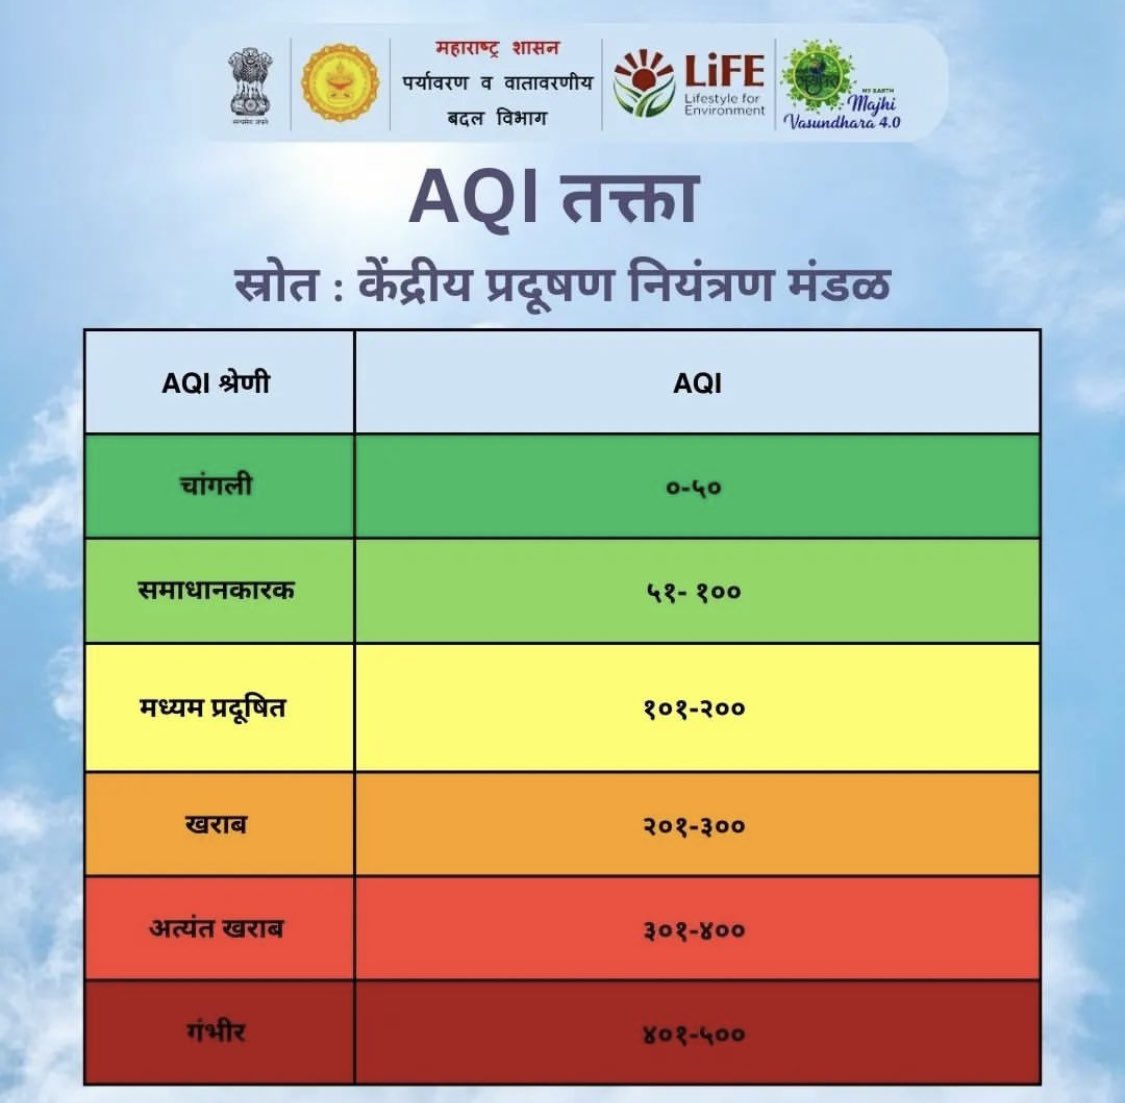 #majhivasundhara #AirQualityIndex #airpollution #Vayu #savetheplanet #earth #BanonPlastic Smmu PuneDivision